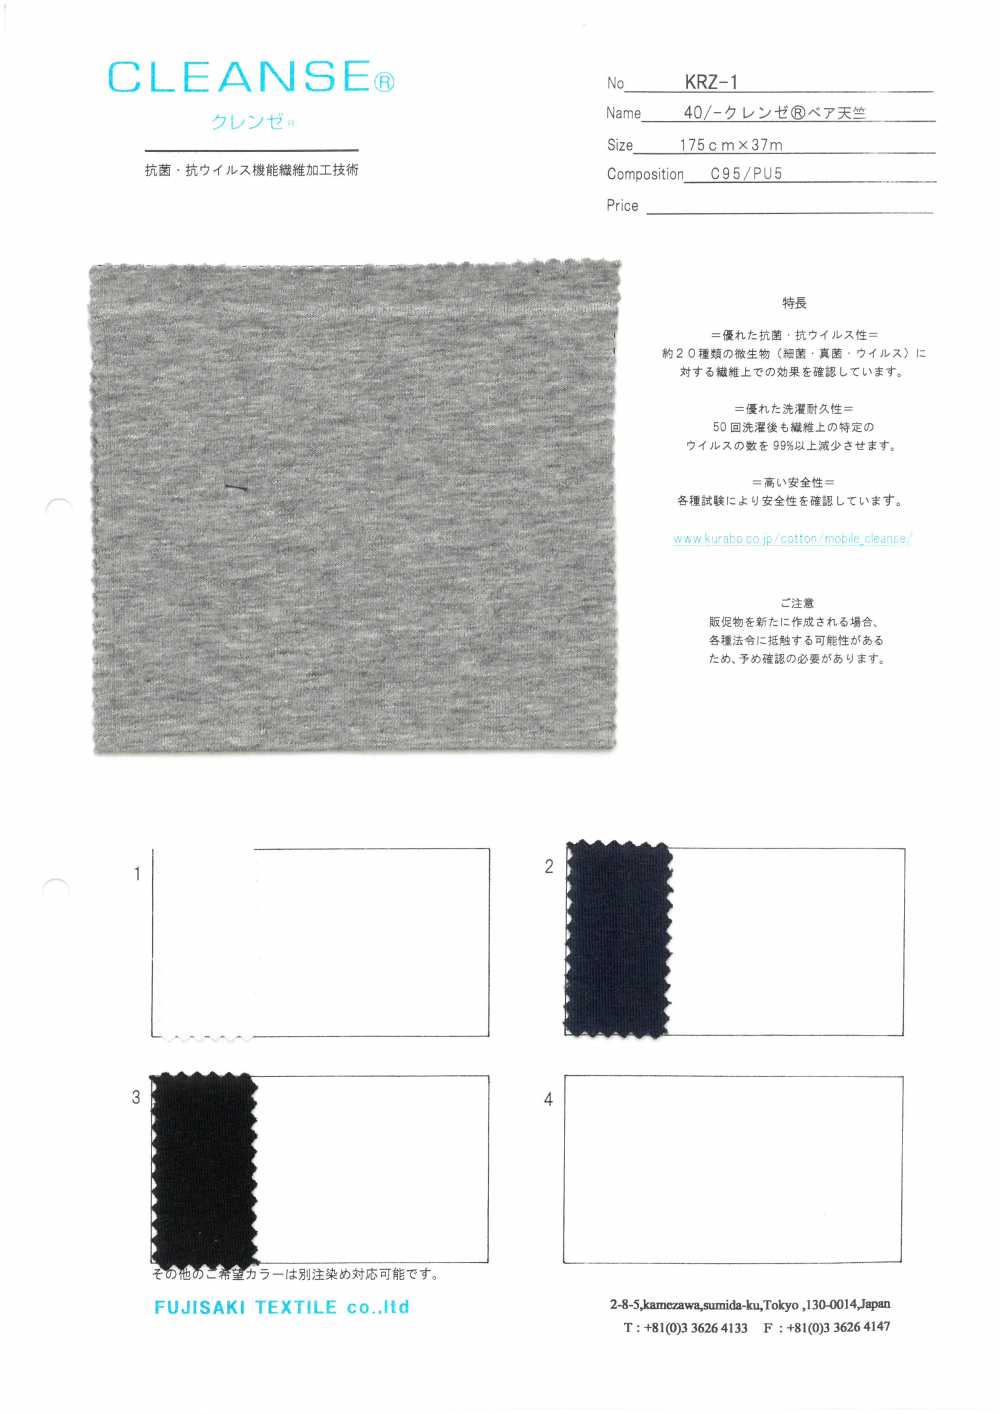 KRZ-1 40 / CLEANSE& # 174; Vải Cotton Tenjiku Vải Bông Gấu Fujisaki Textile